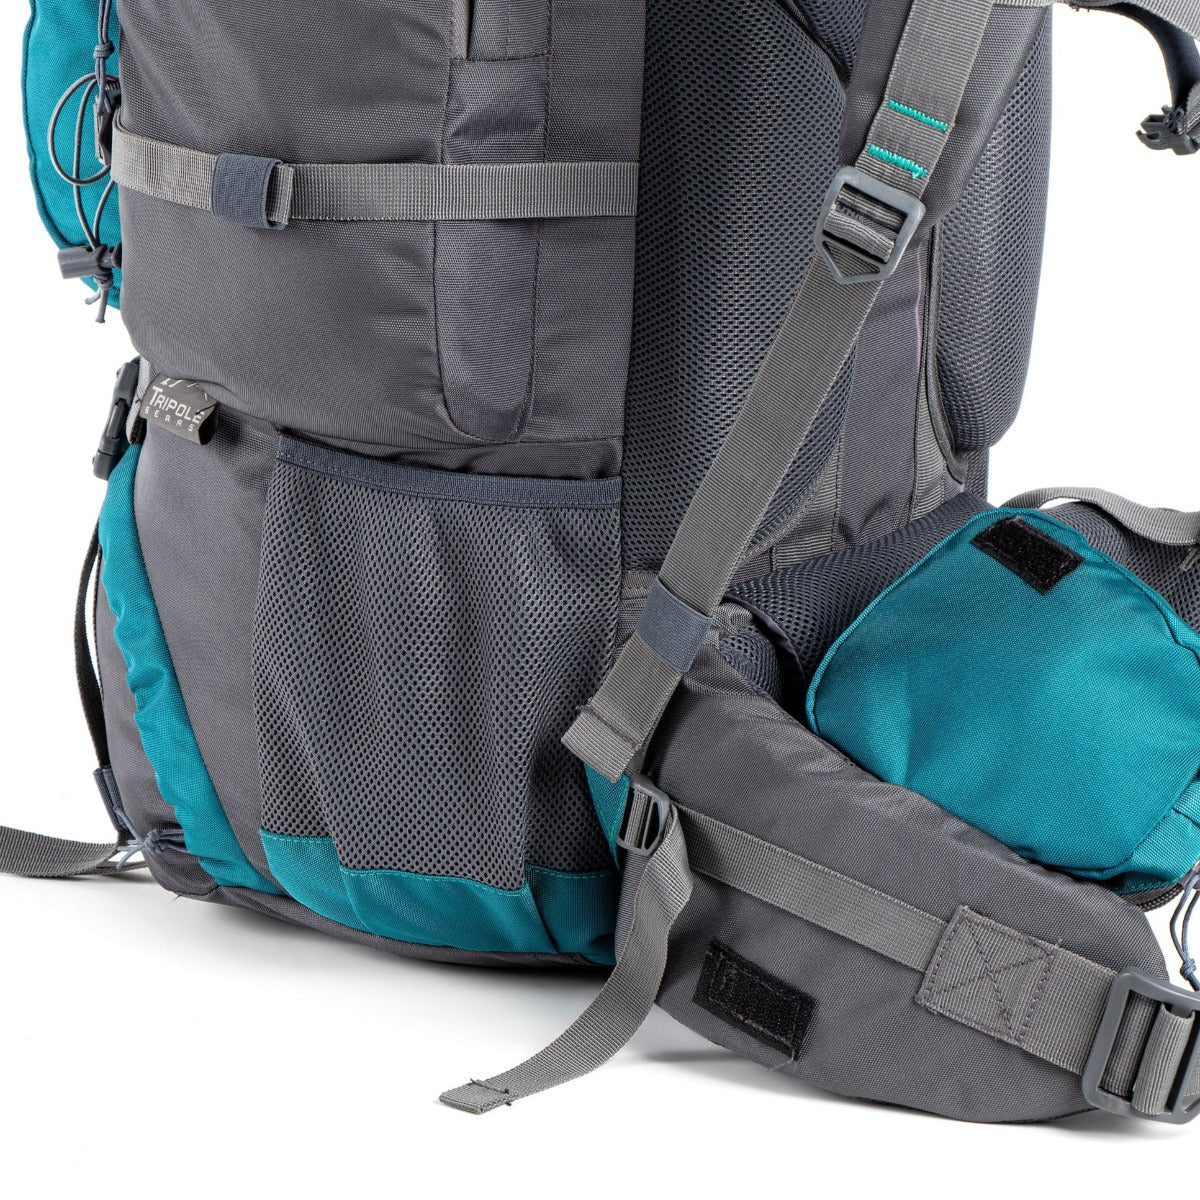 Walker Trekking and Backpacking Rucksack - 65 Litre - Grey & Sea Green 7